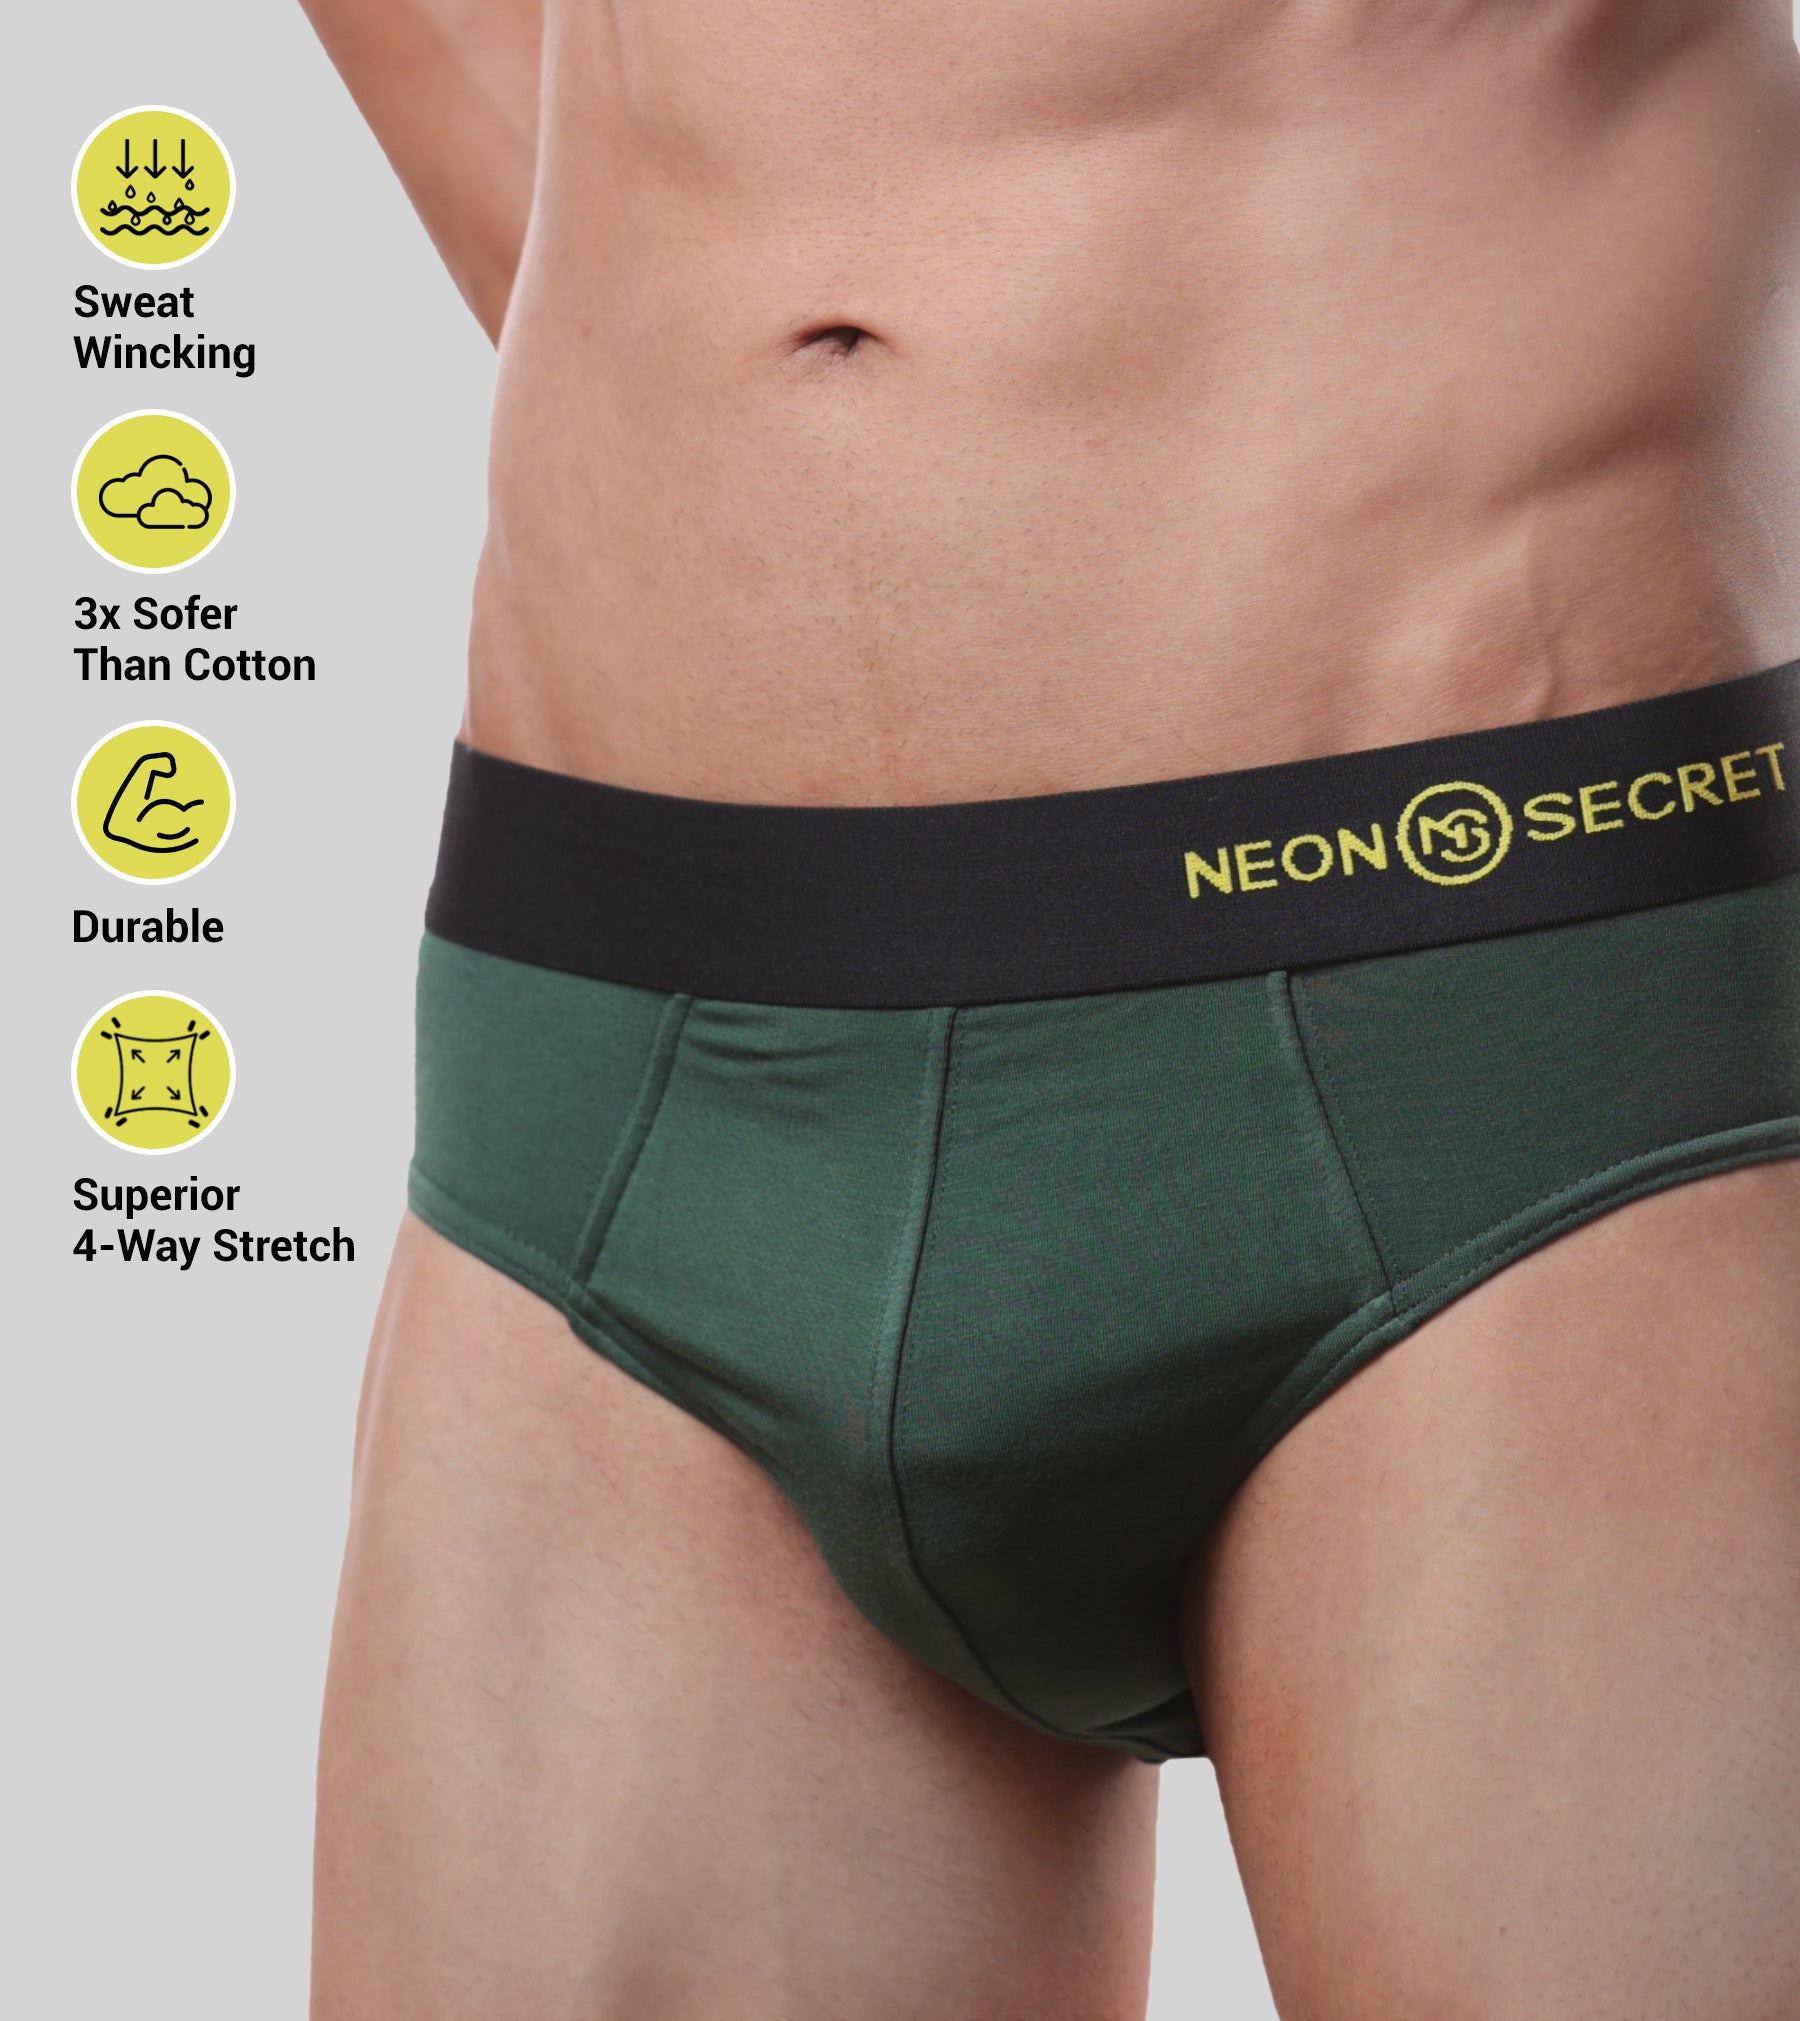 NEON SECRET Men's Underwear, Premium Micromodal Briefs| Ultimate Comfort &  Breathability | Soft, Antimicrobial | Men's Underwear with Microfiber